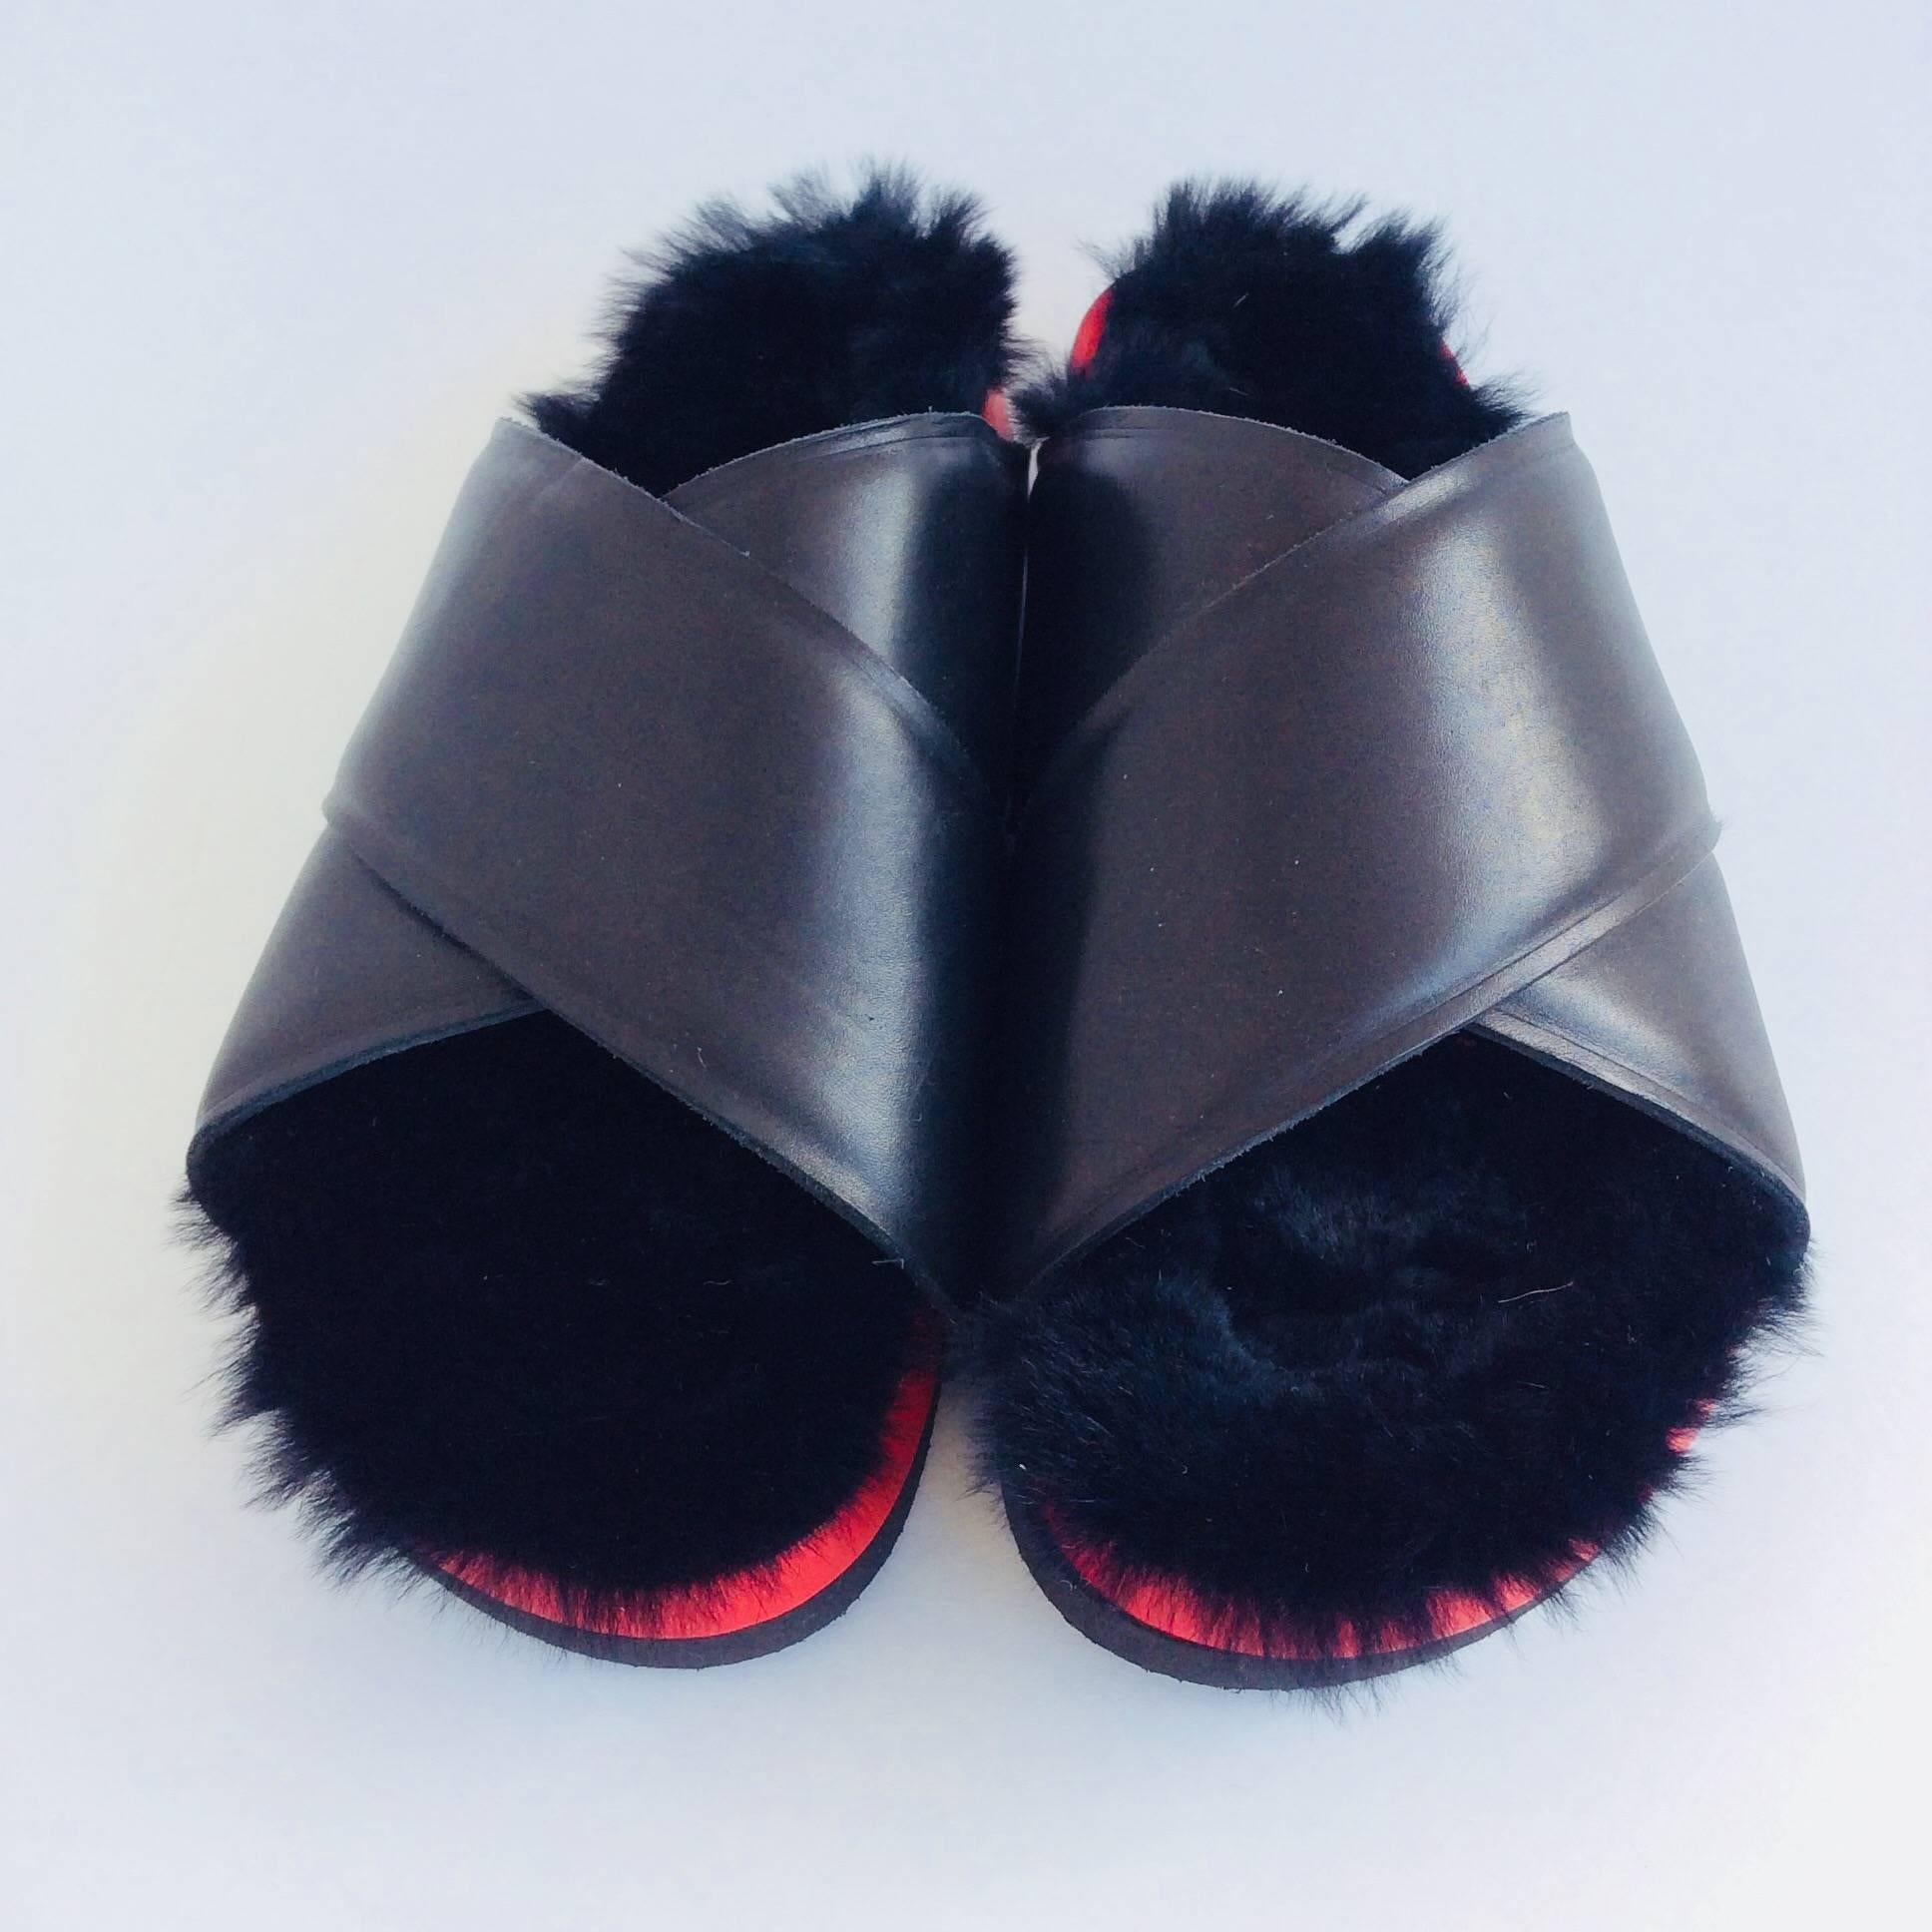 Celine fur-lined black leather slides with red platforms. 

Sizing: Fr37, Us7

Platform height: 1.5 inches